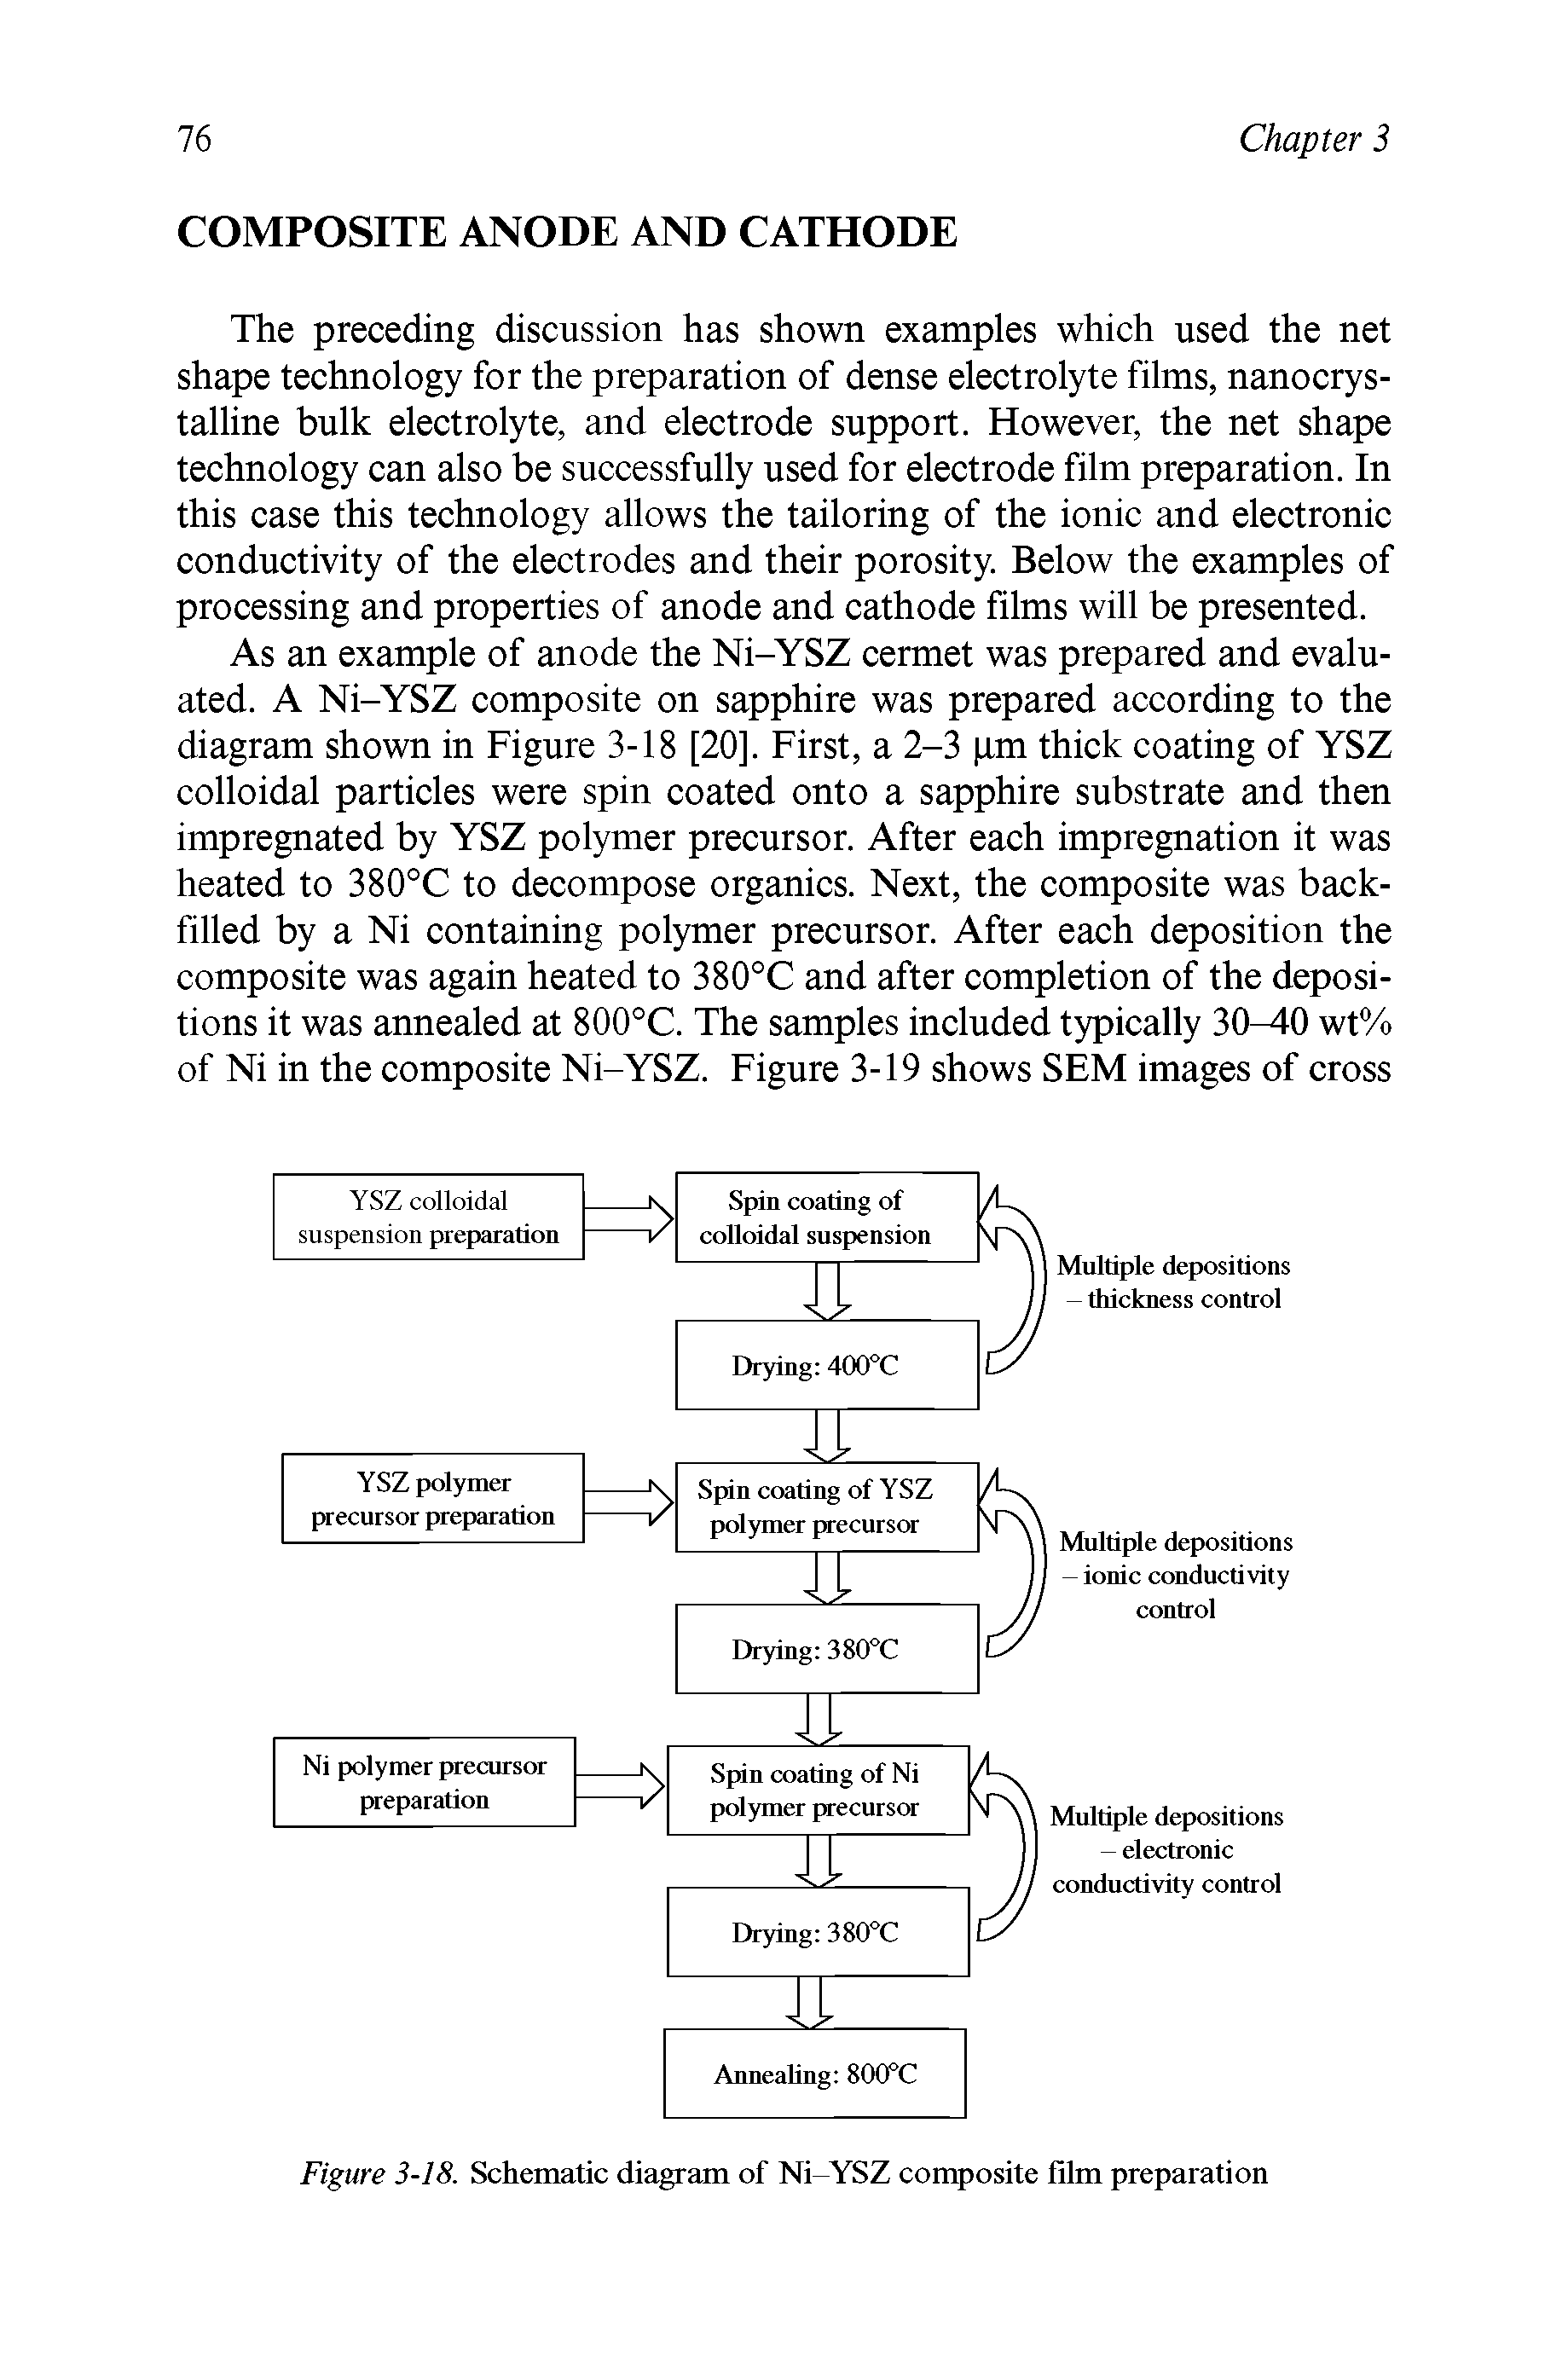 Figure 3-18. Schematic diagram of Ni-YSZ composite film preparation...